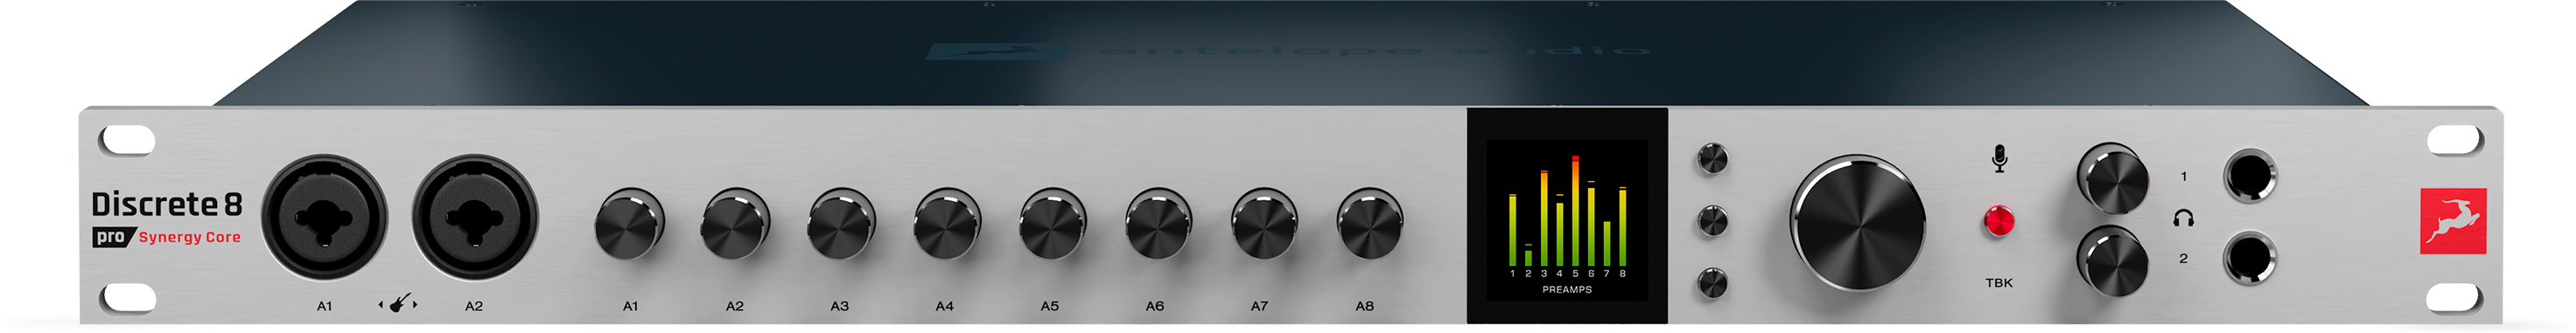 Antelope Audio Discrete 8 Pro Synergy Core - Interface de audio thunderbolt - Main picture